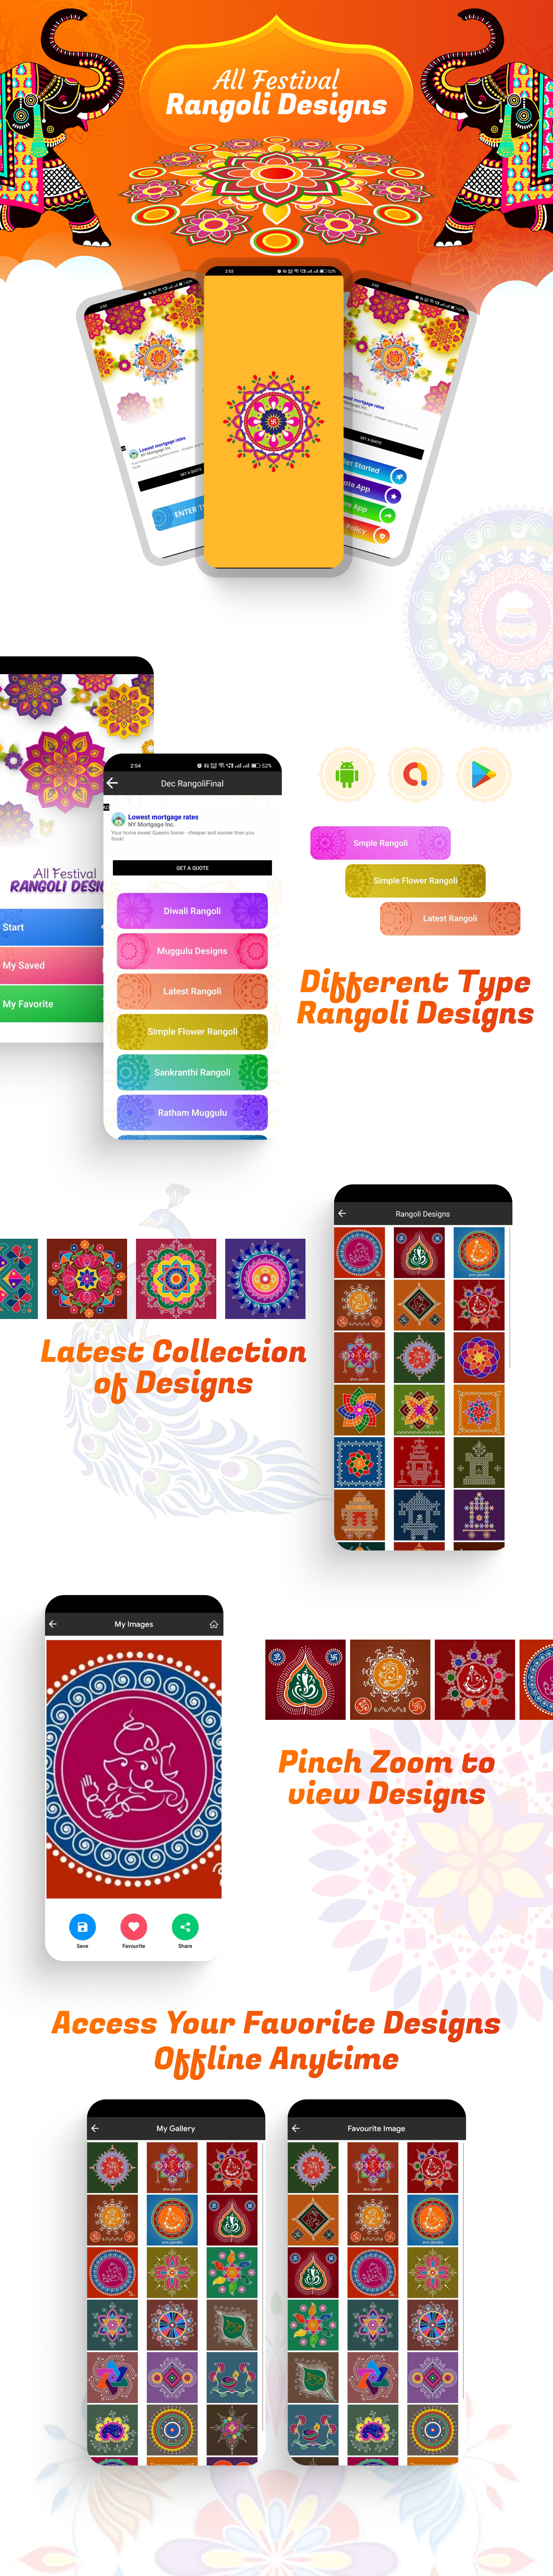 All Festival Rangoli Design - Hand Made Rangoli Designs - Colorful Rangoli Design Ideas - 1